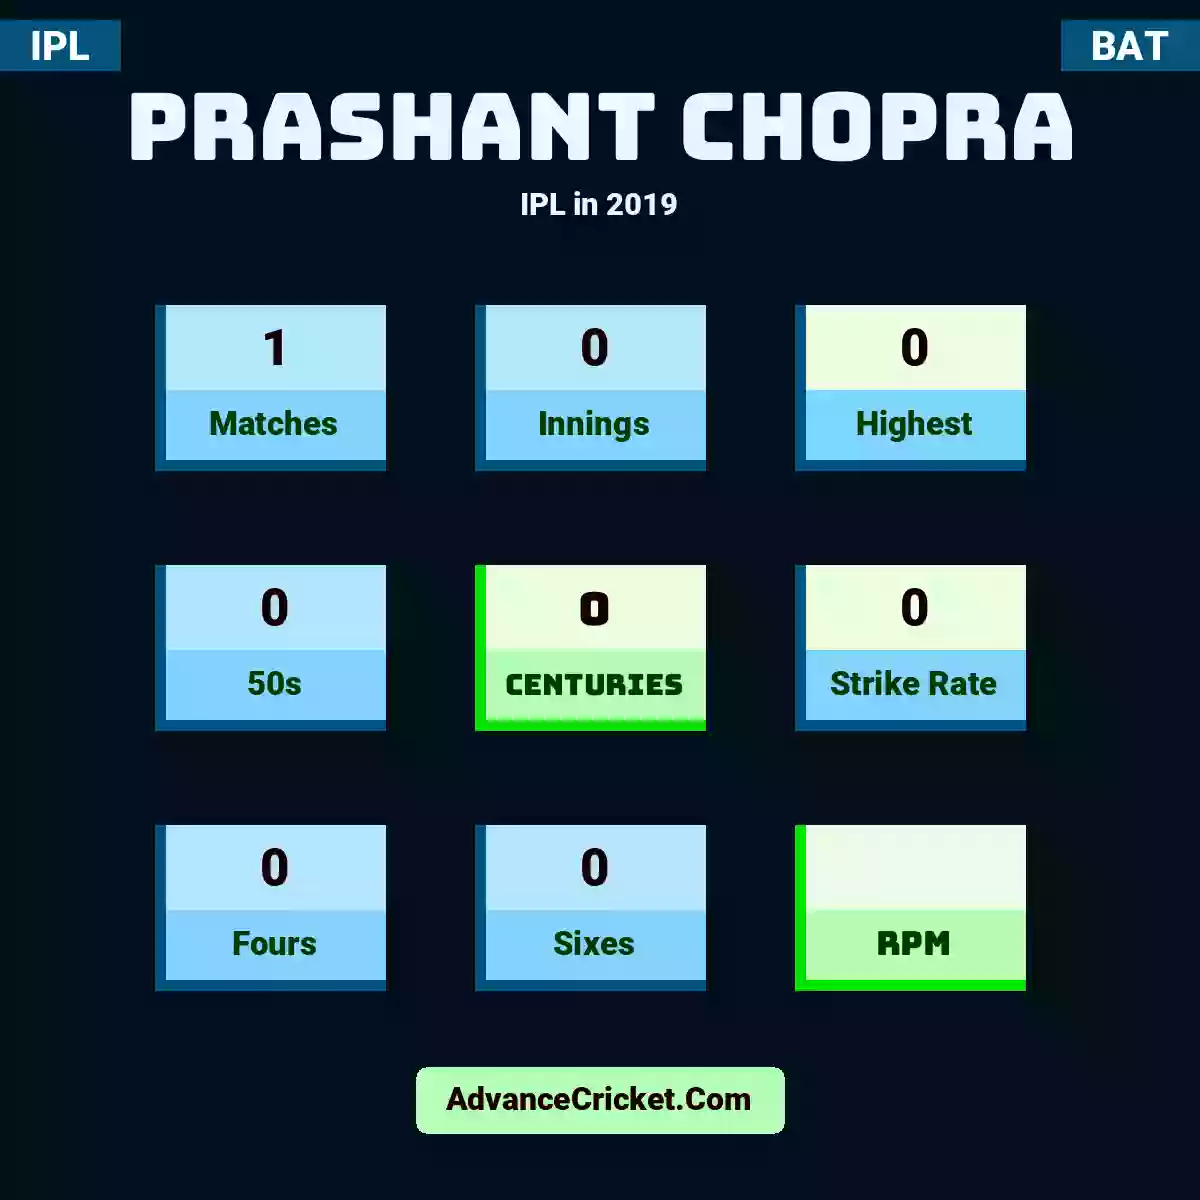 Prashant Chopra IPL  in 2019, Prashant Chopra played 1 matches, scored 0 runs as highest, 0 half-centuries, and 0 centuries, with a strike rate of 0. P.Chopra hit 0 fours and 0 sixes.